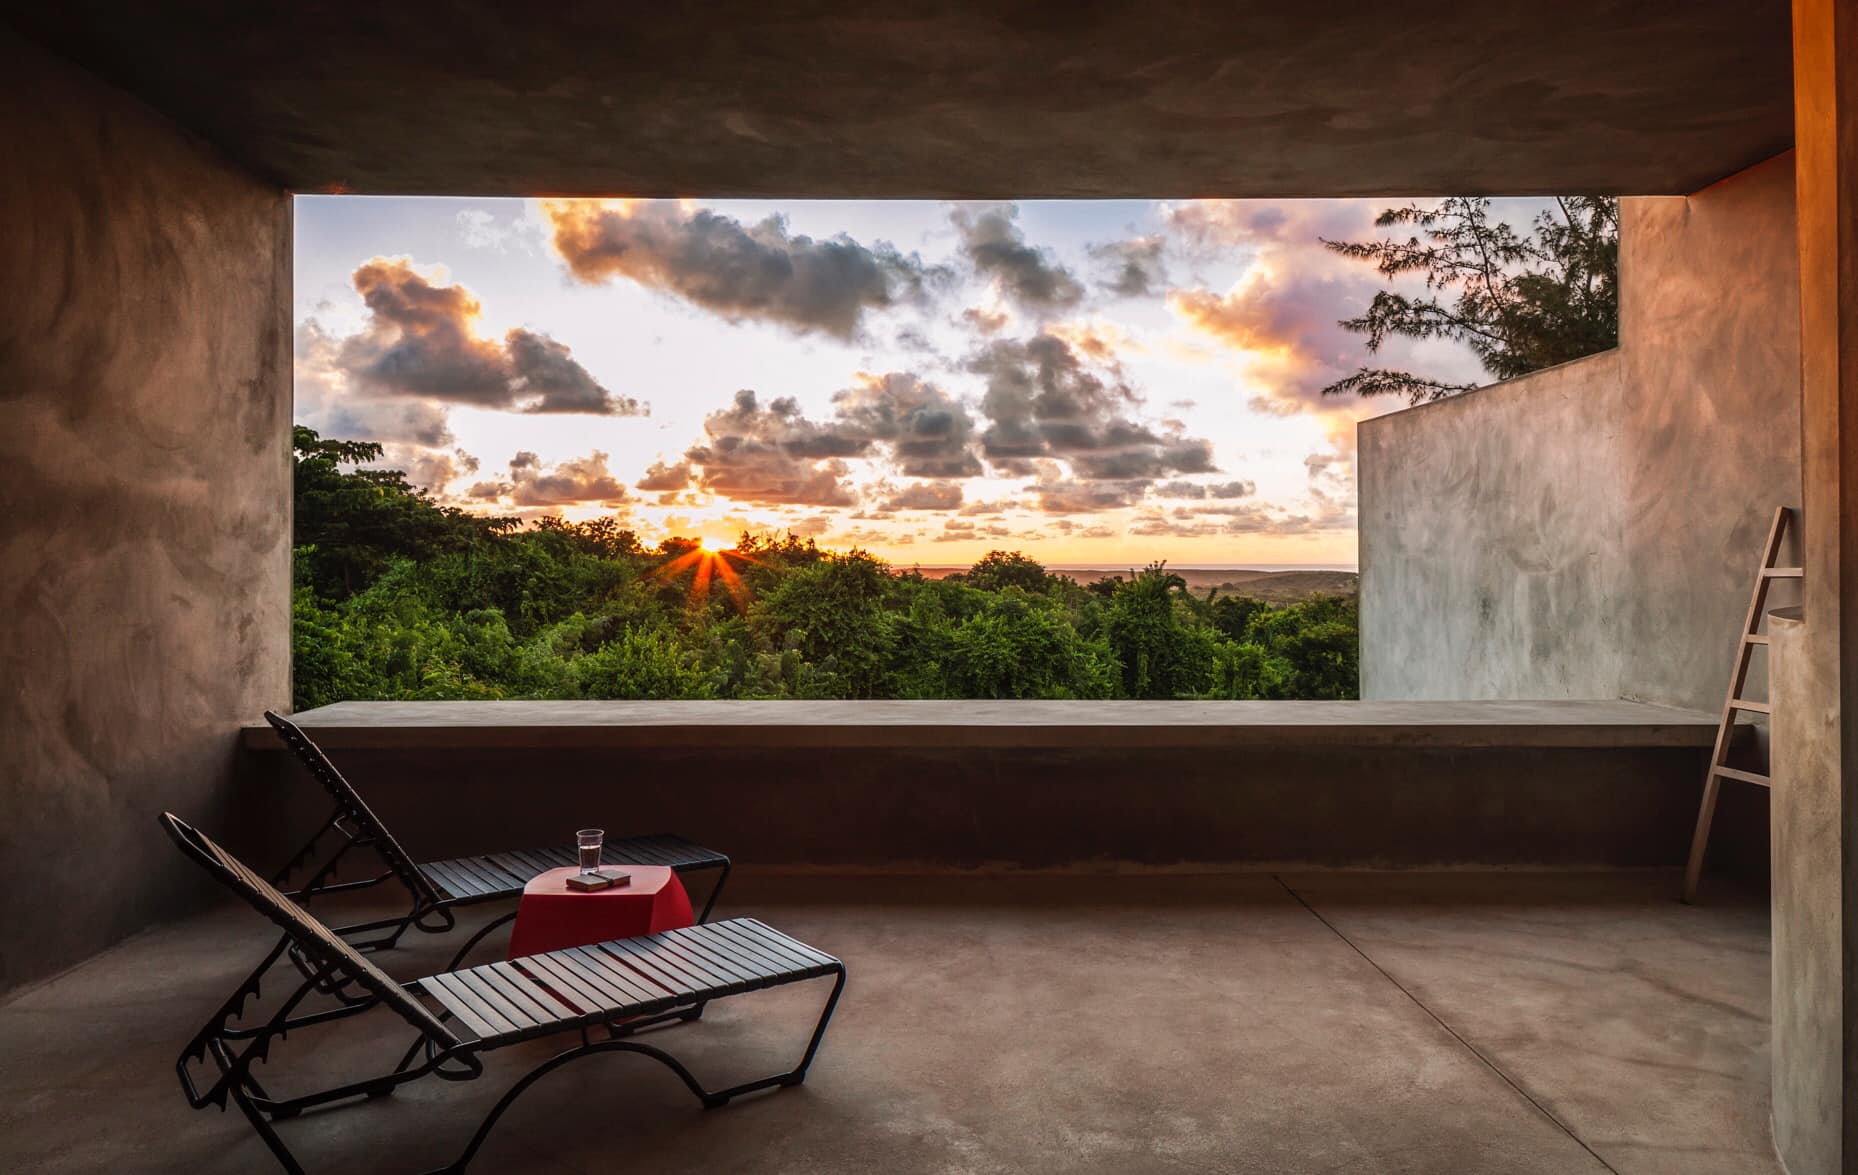 【#Travel】世界綠色酒店選：加勒比海上的璀璨度假天堂，波多黎各永續海島酒店Hix Island House擁抱自然、提供避世離網生活體驗